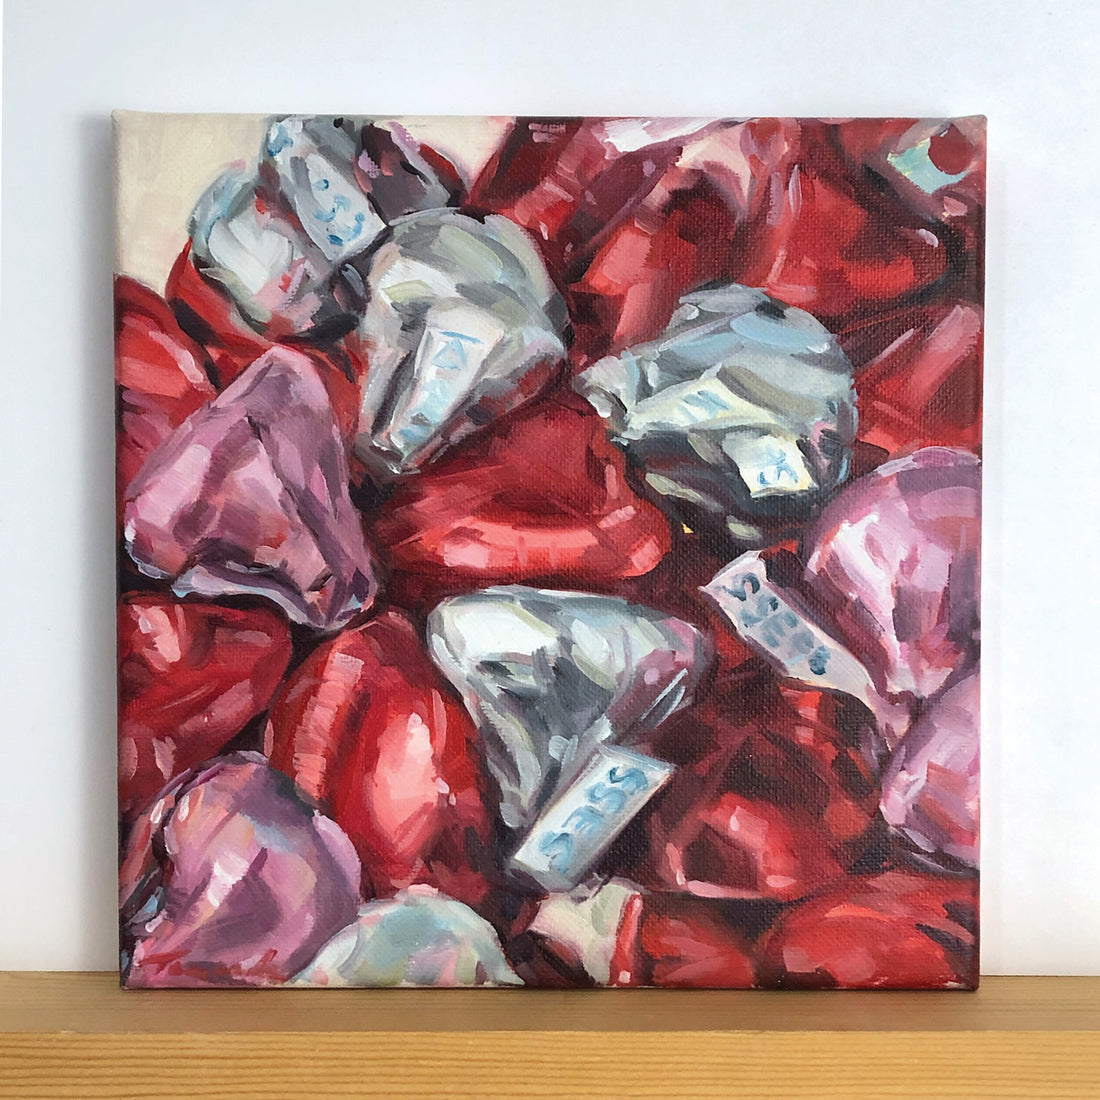 Tamanda Elia "Hearts and Kisses" abstract painting Canadian artist